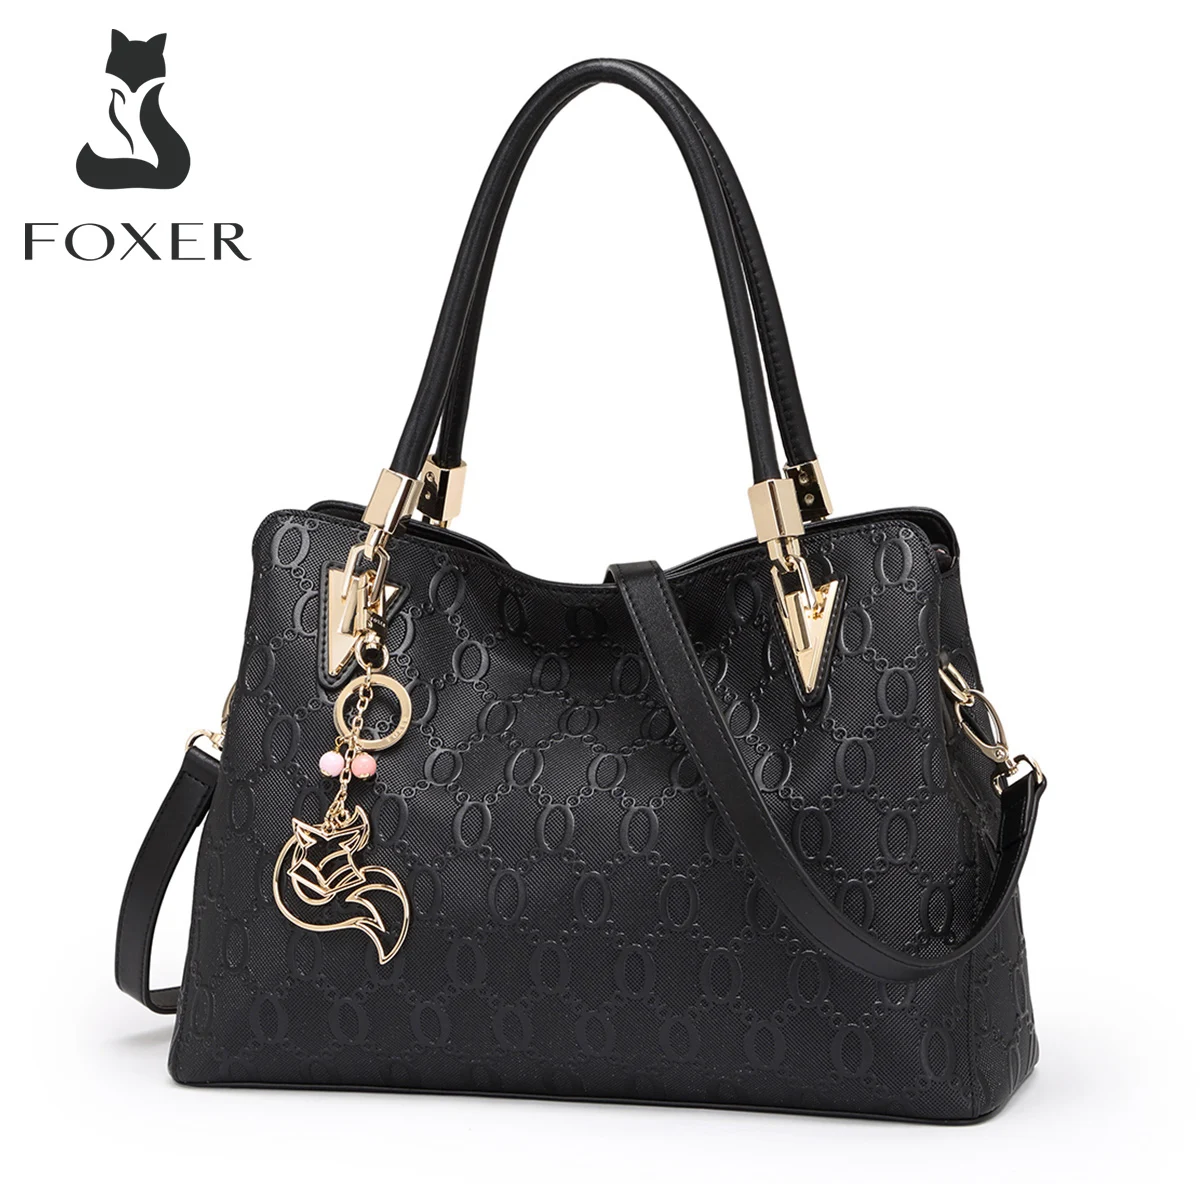 FOXER Women's Handbag Occident Style Crossbody Shoulder Bags Female Split Leather Totes Lady Commute Purse Office Top Handle Bag